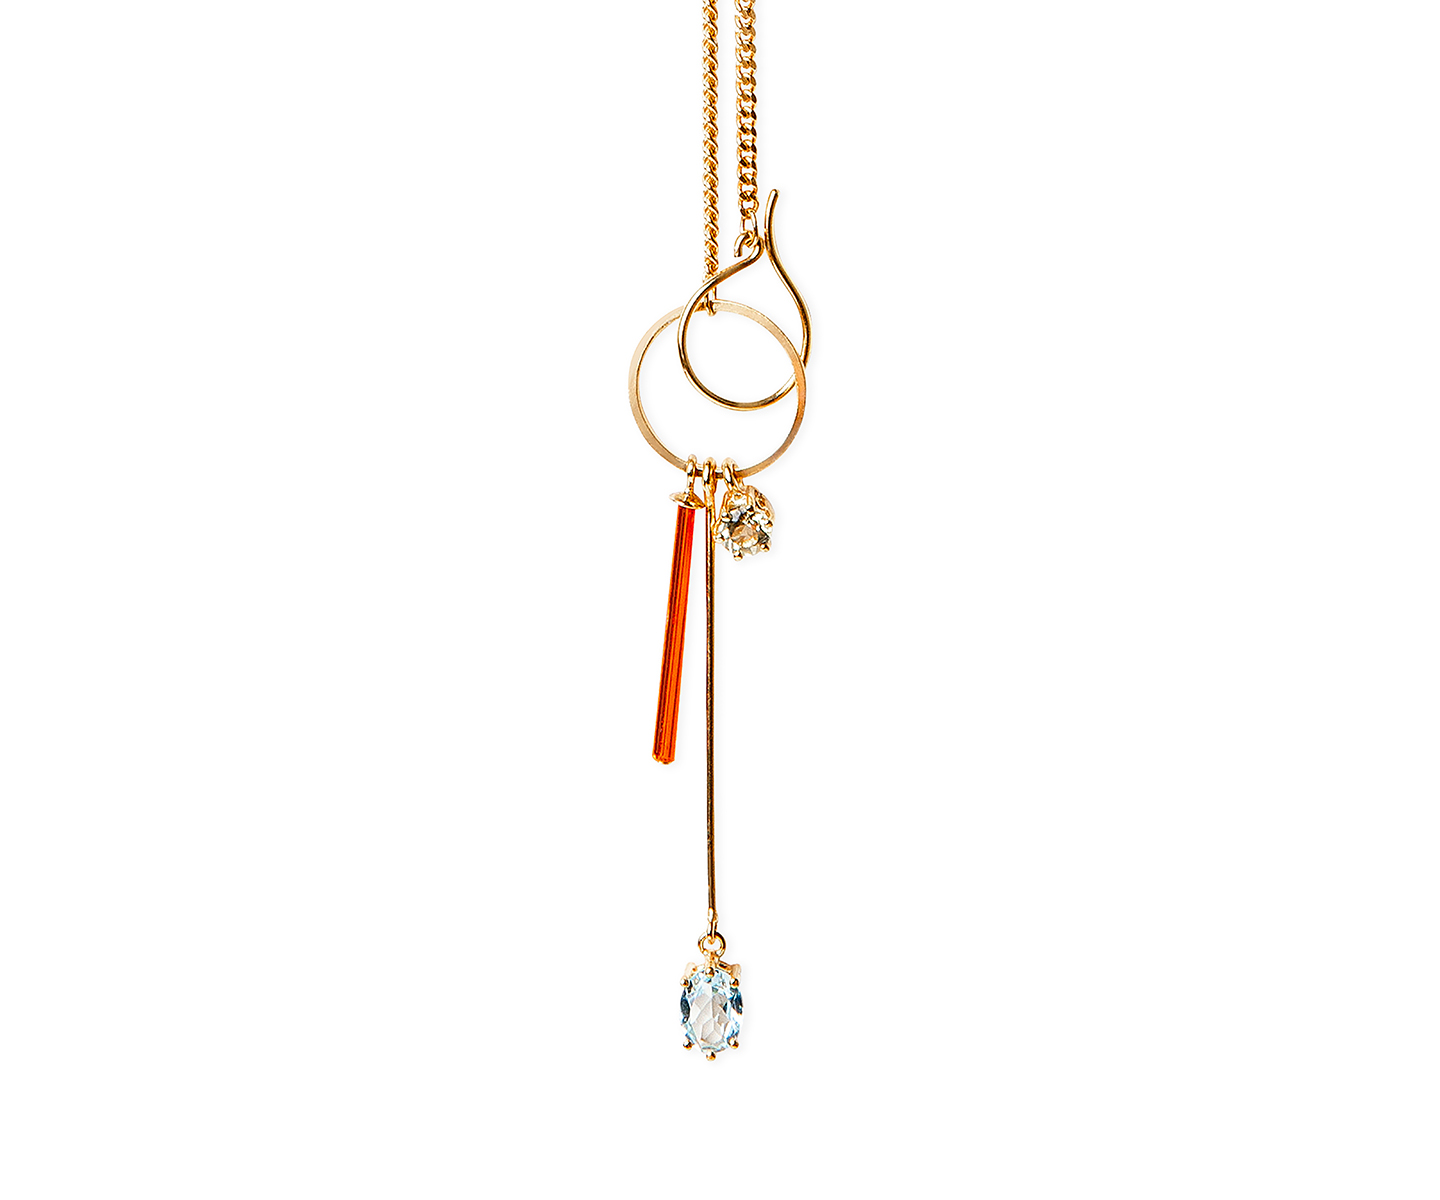 Gold necklace with neon orange crystal, blue topaz and lemon quartz.